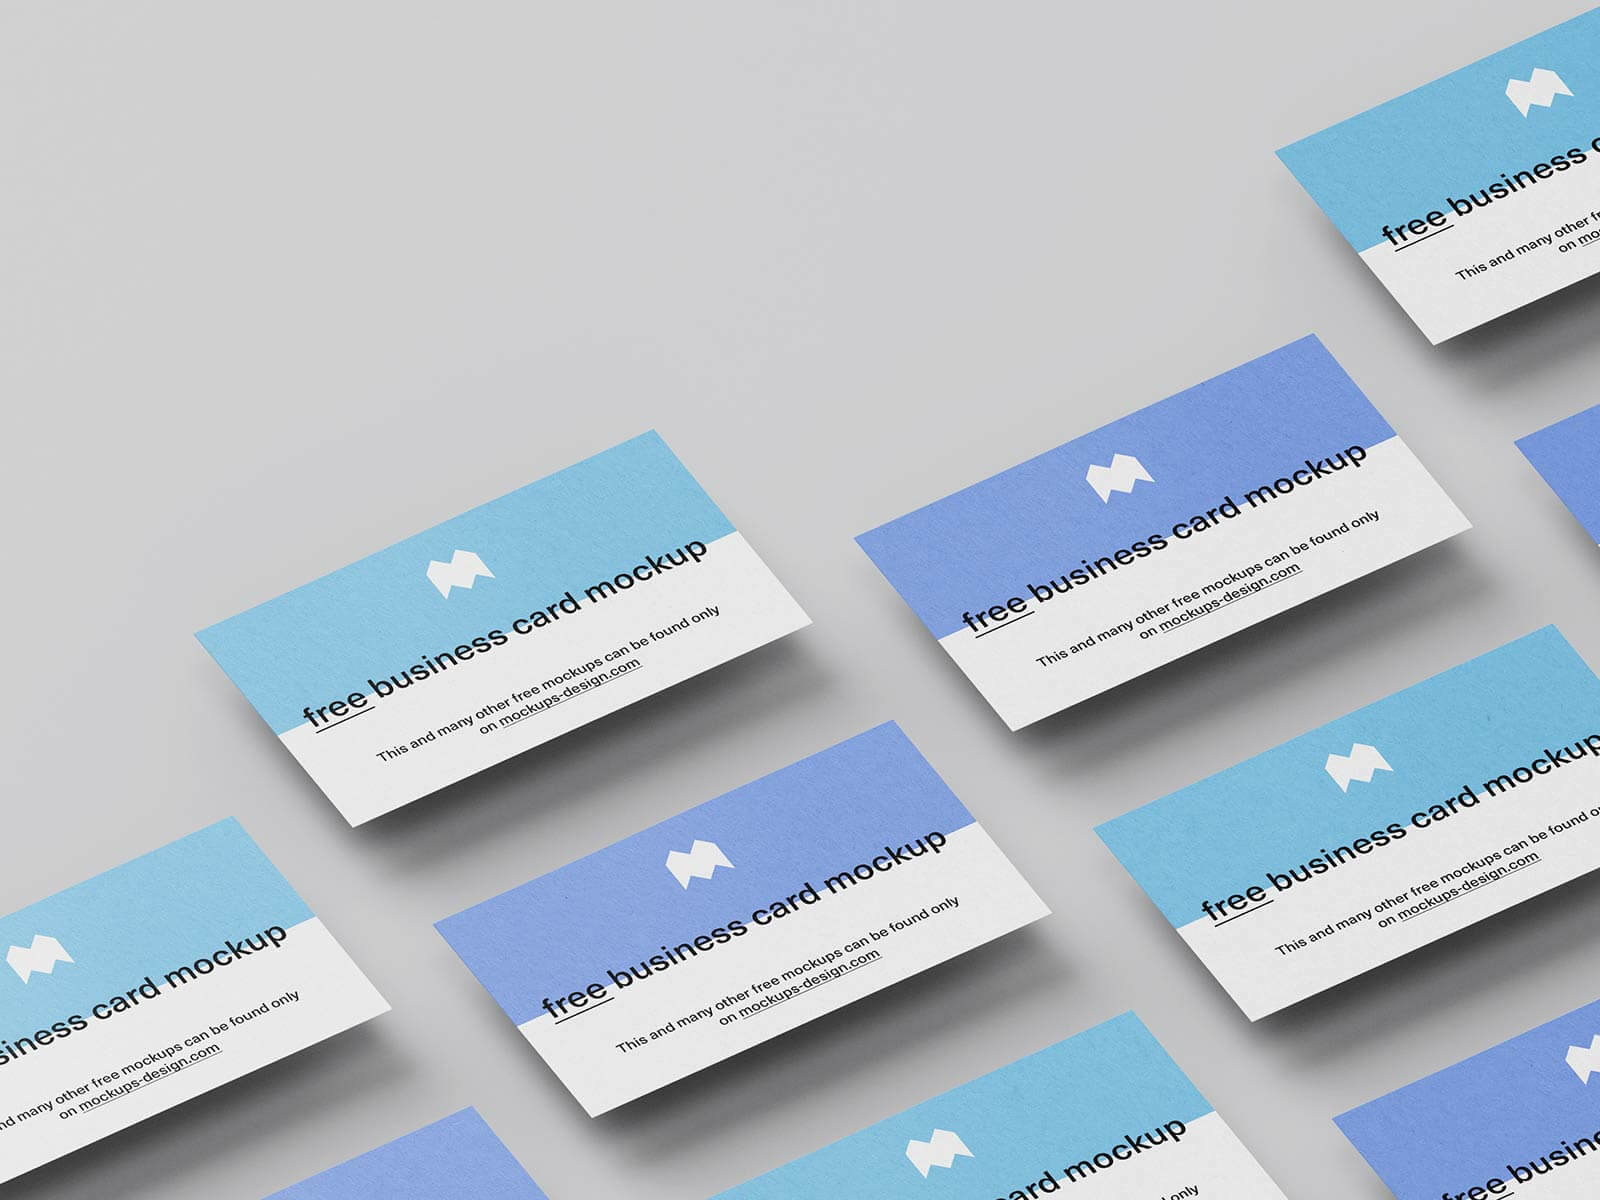 Free 3.5 x 2 Inches Business Card Mockup PSD Set Good Mockups